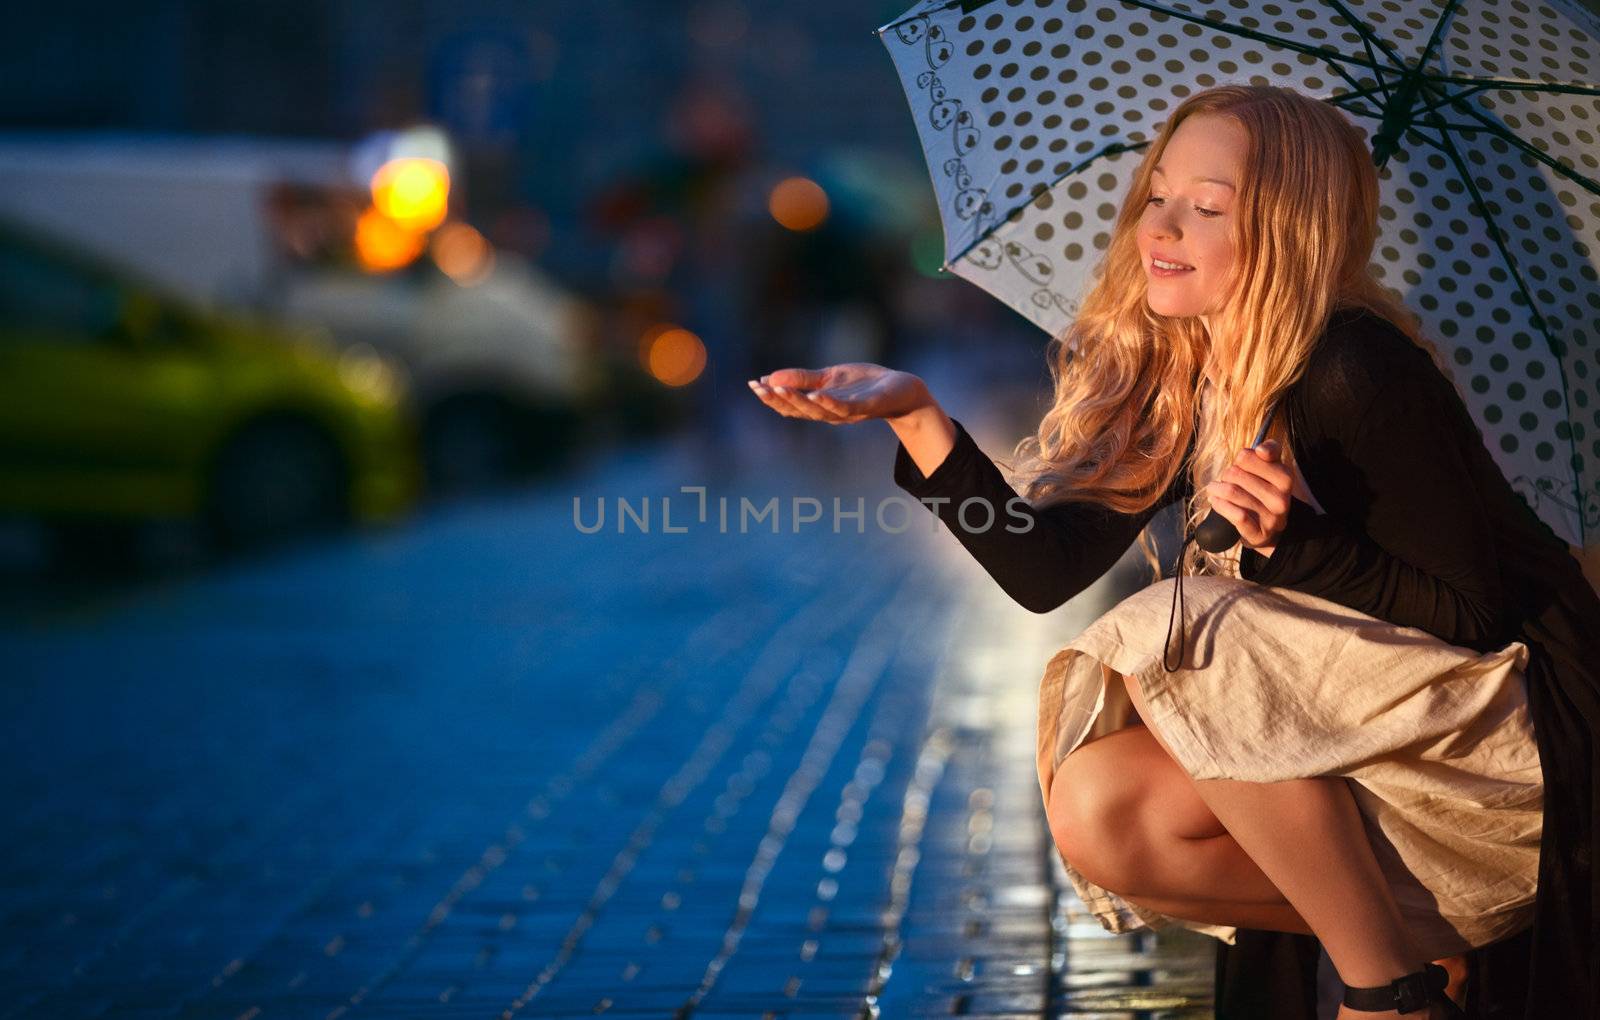 Under the Rain by petr_malyshev